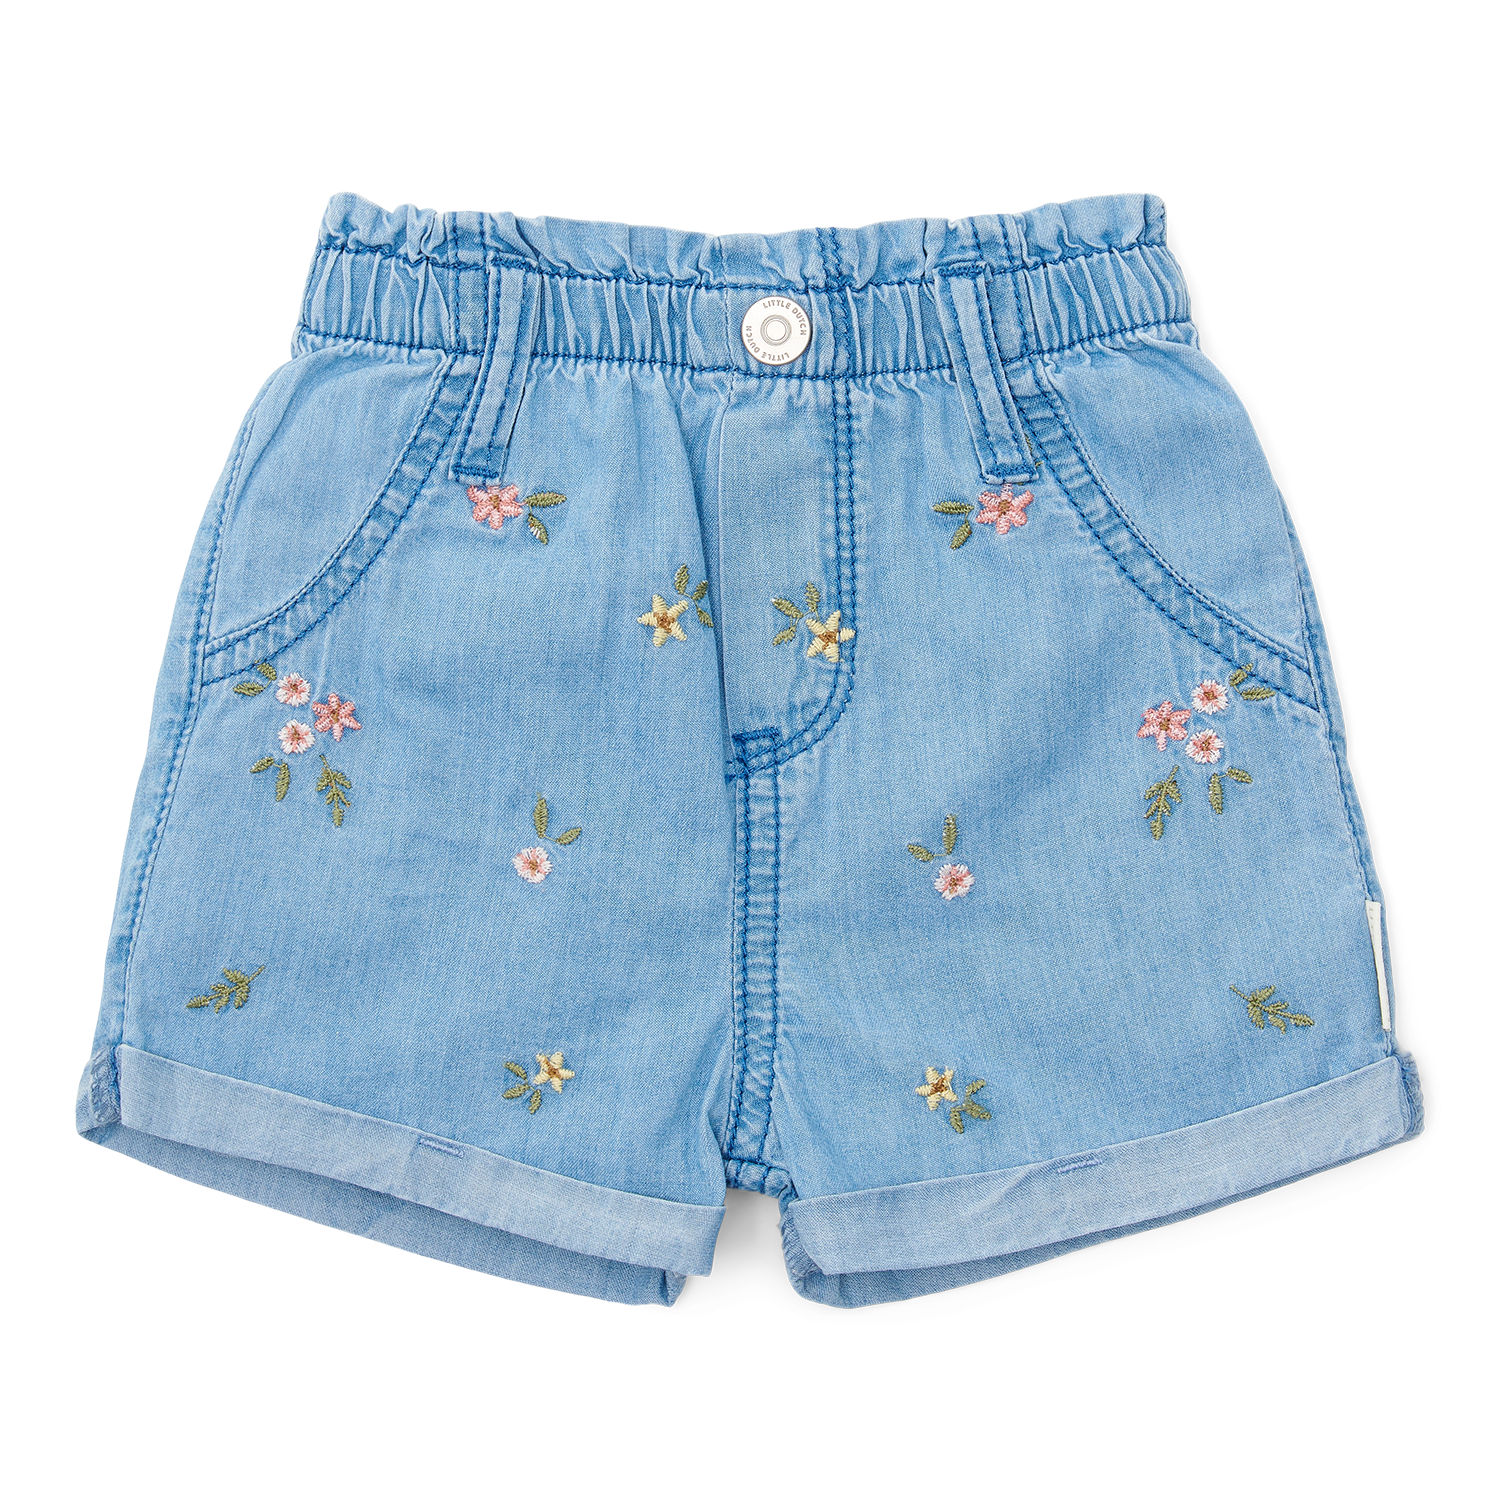 Kurze Hose / Shorts Denim Little Farm jeans (Gr. 98)